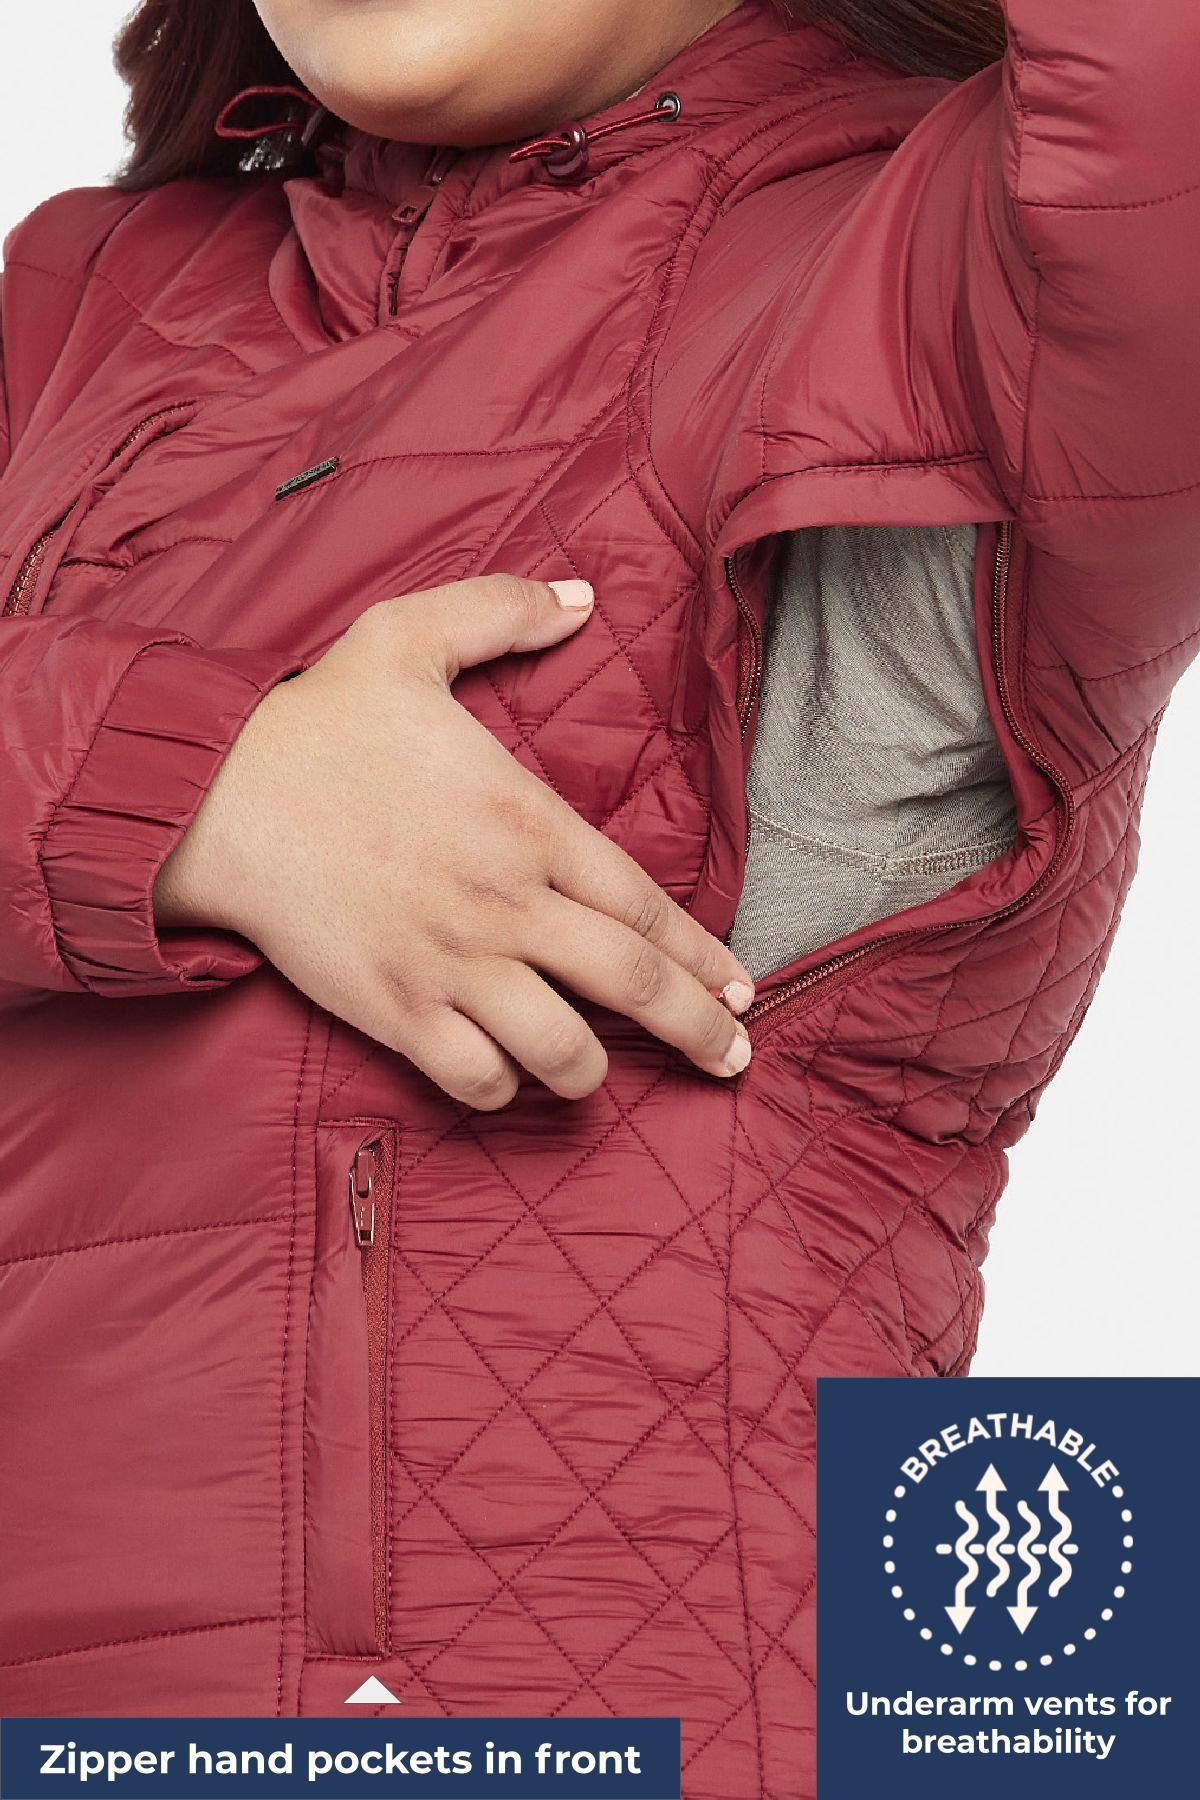 Red Plus Size Puffer Jacket | Women